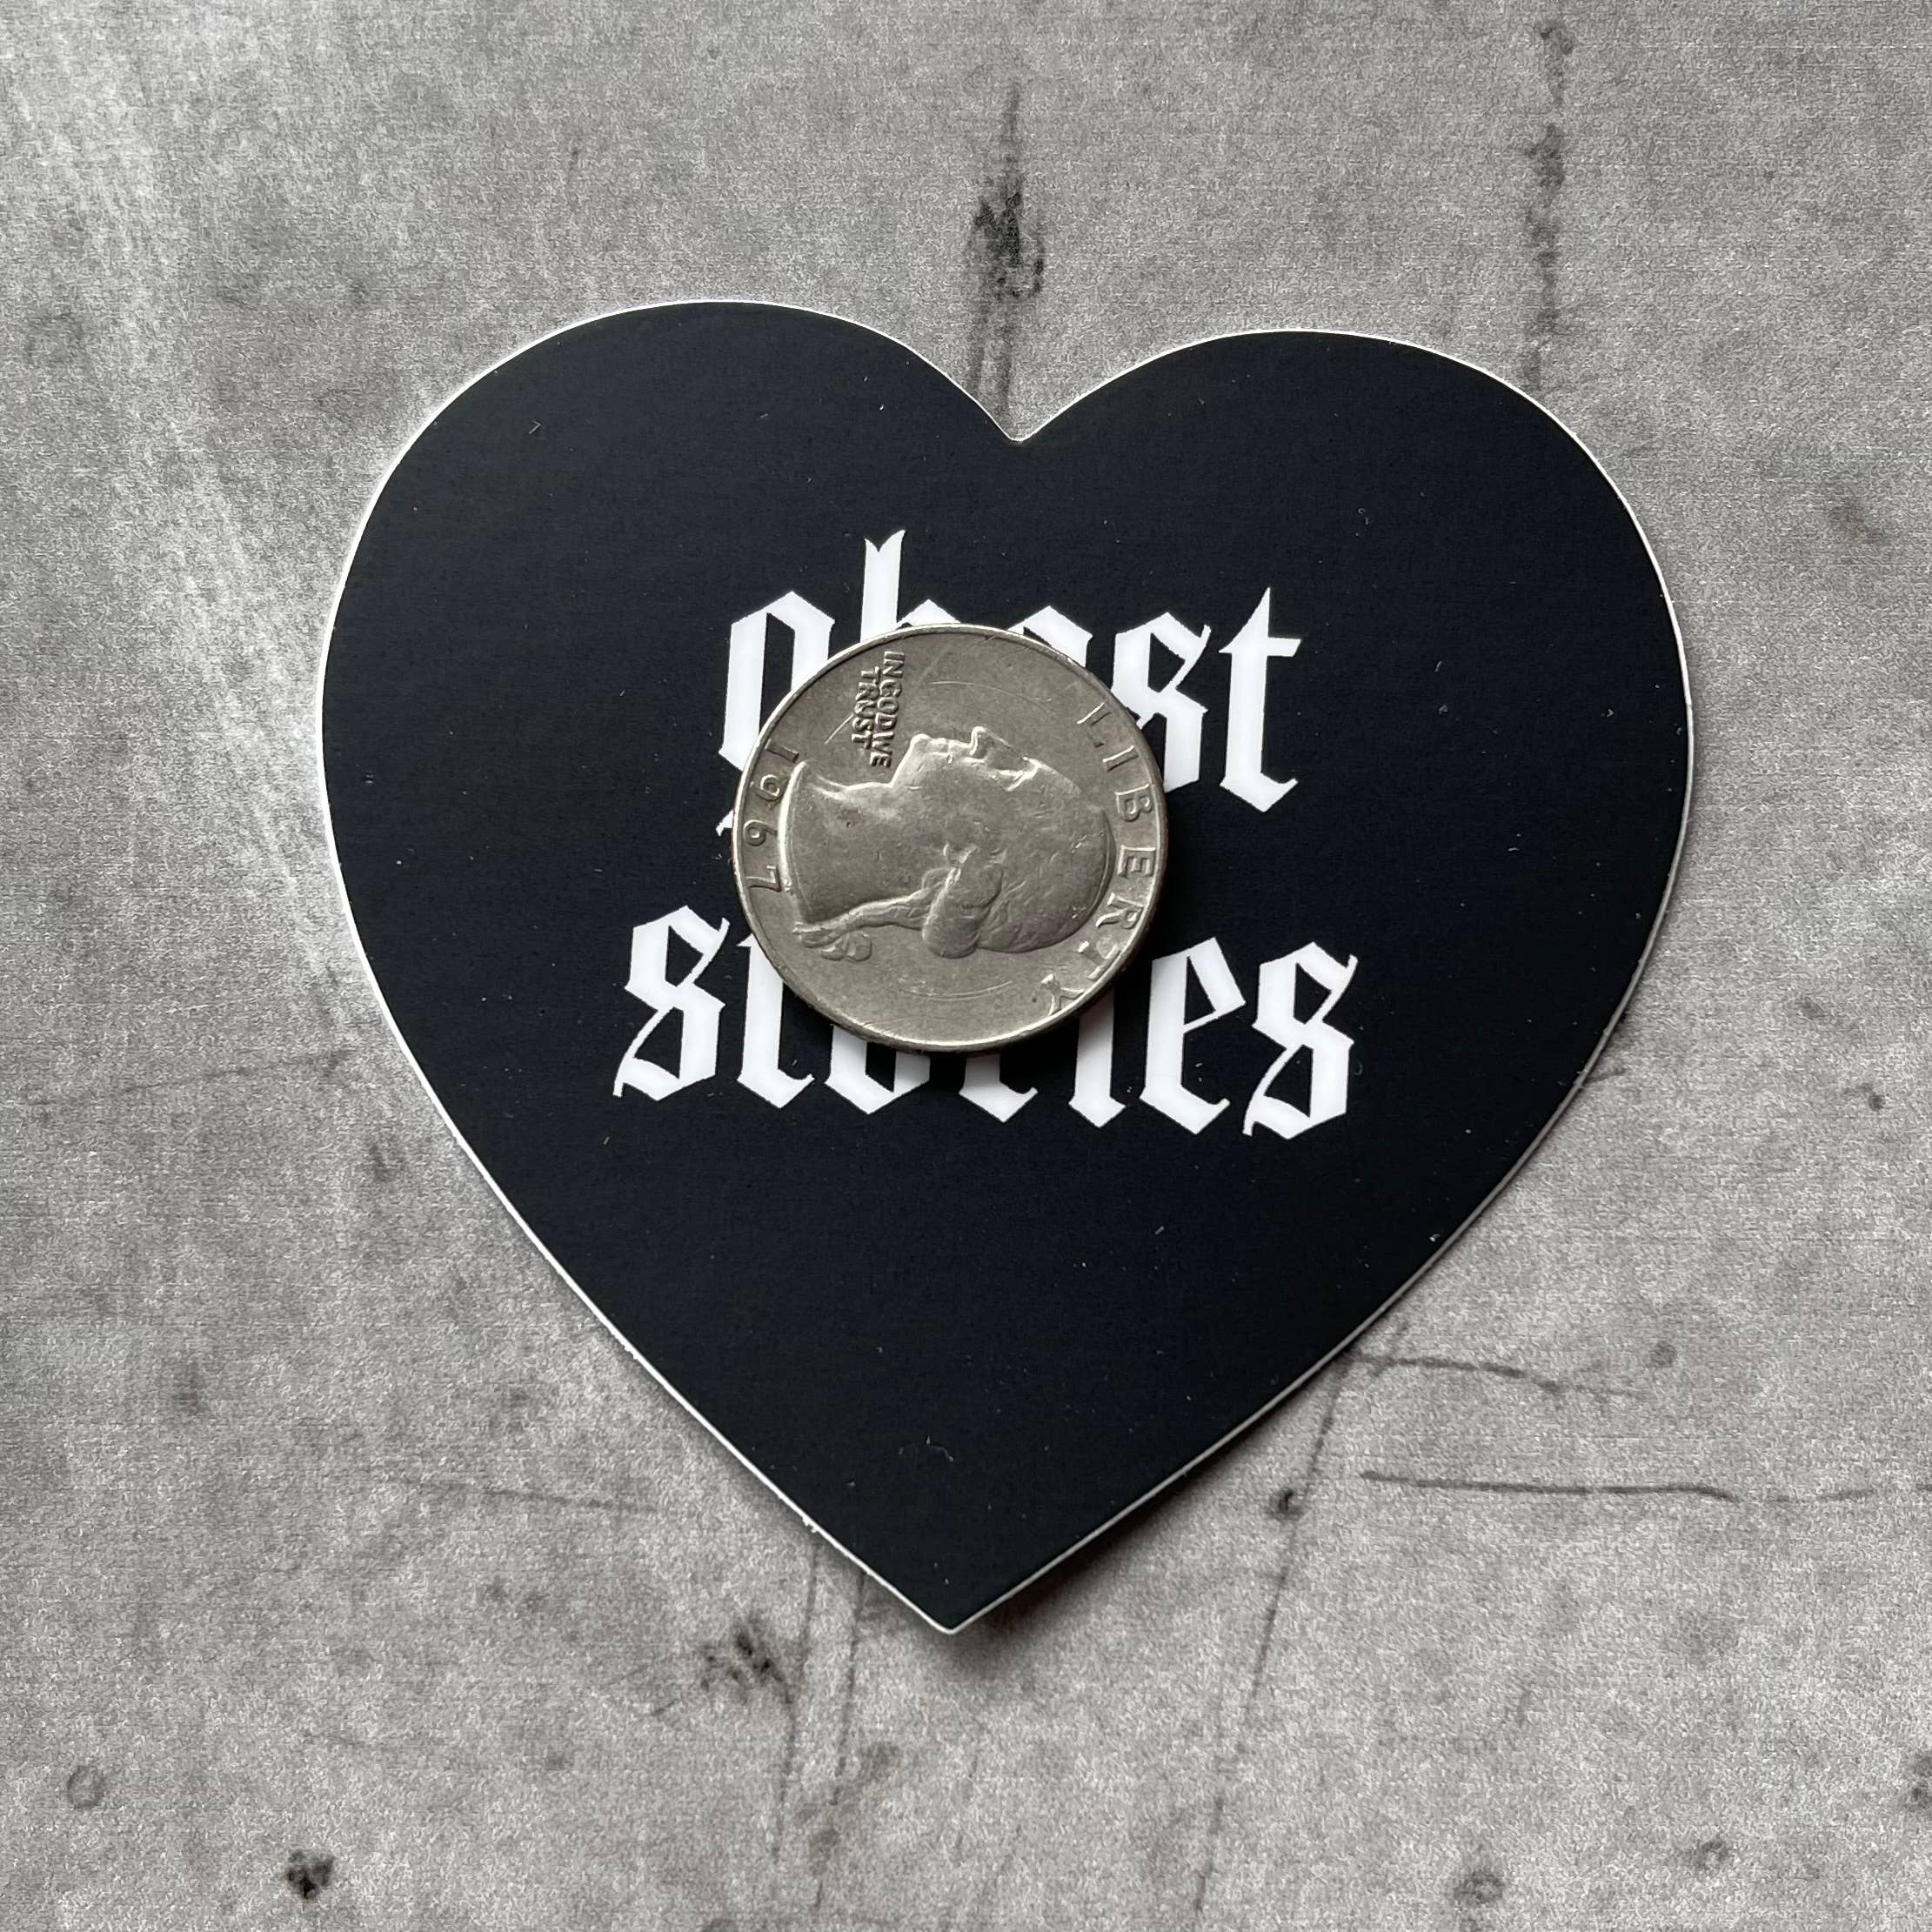 Ghost Stories Heart Sticker // Halloween macabre gifts